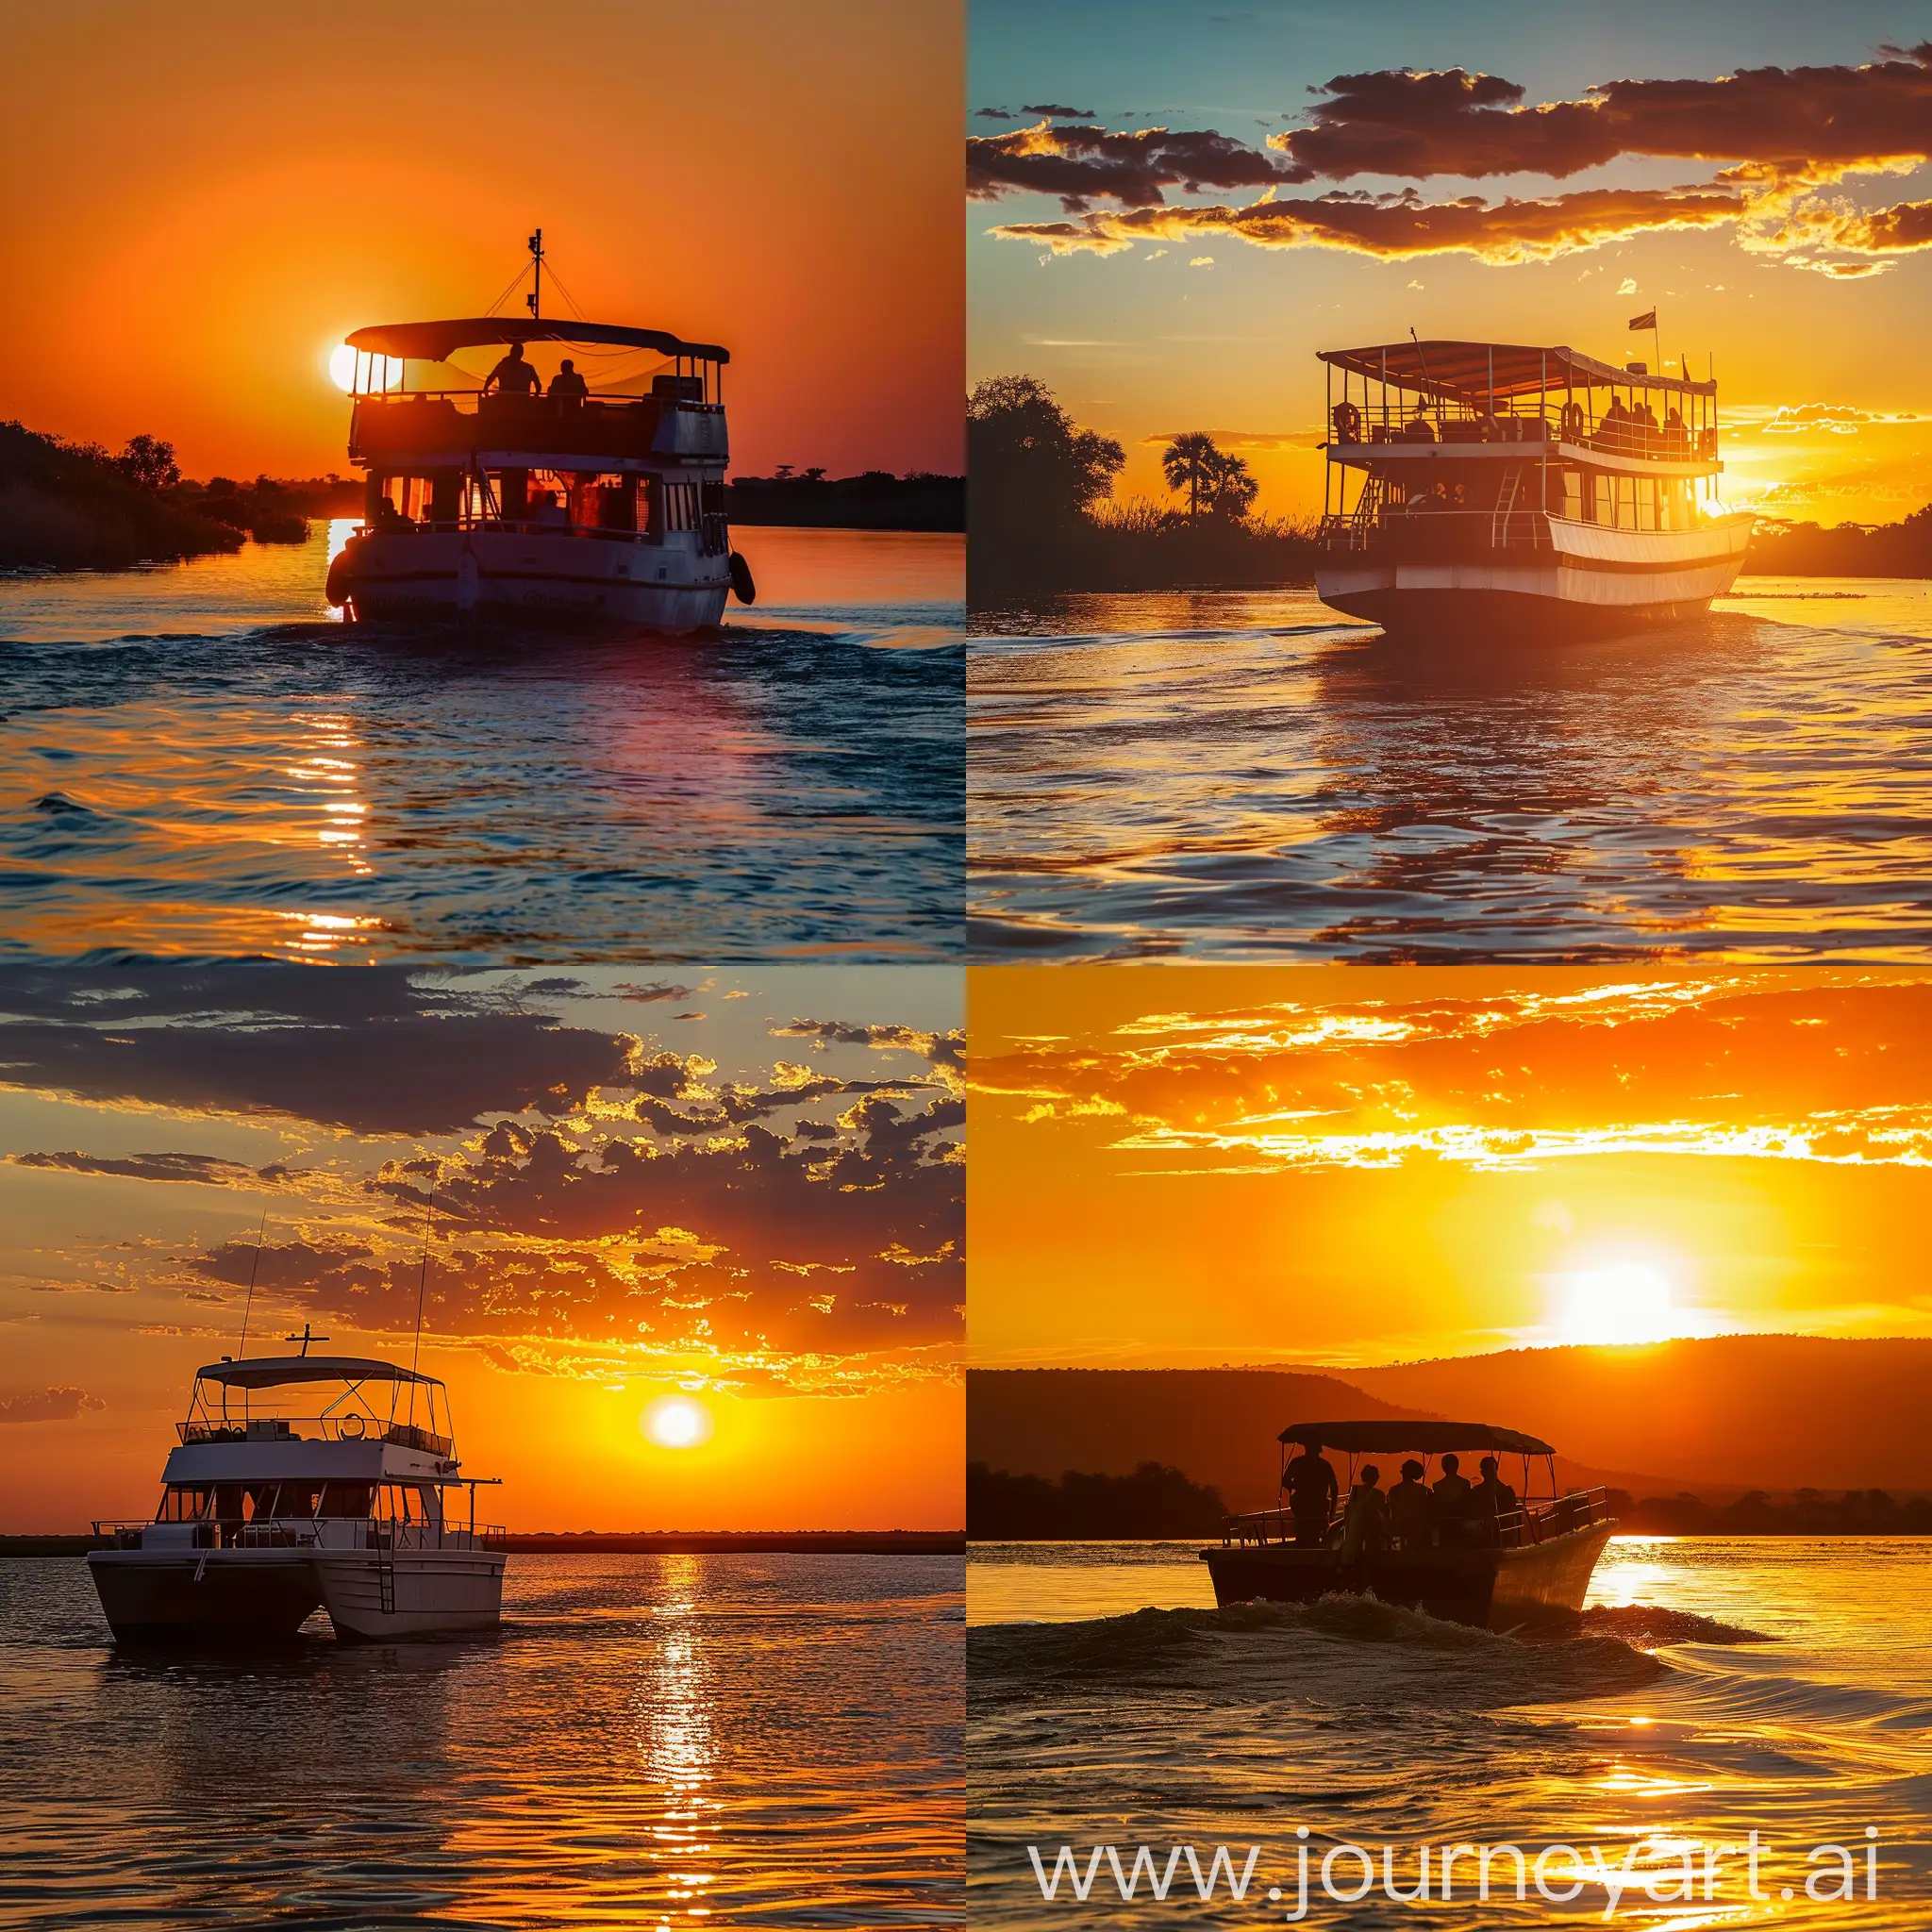 Safari cruise boat, southern africa, sunset, hd, realistic